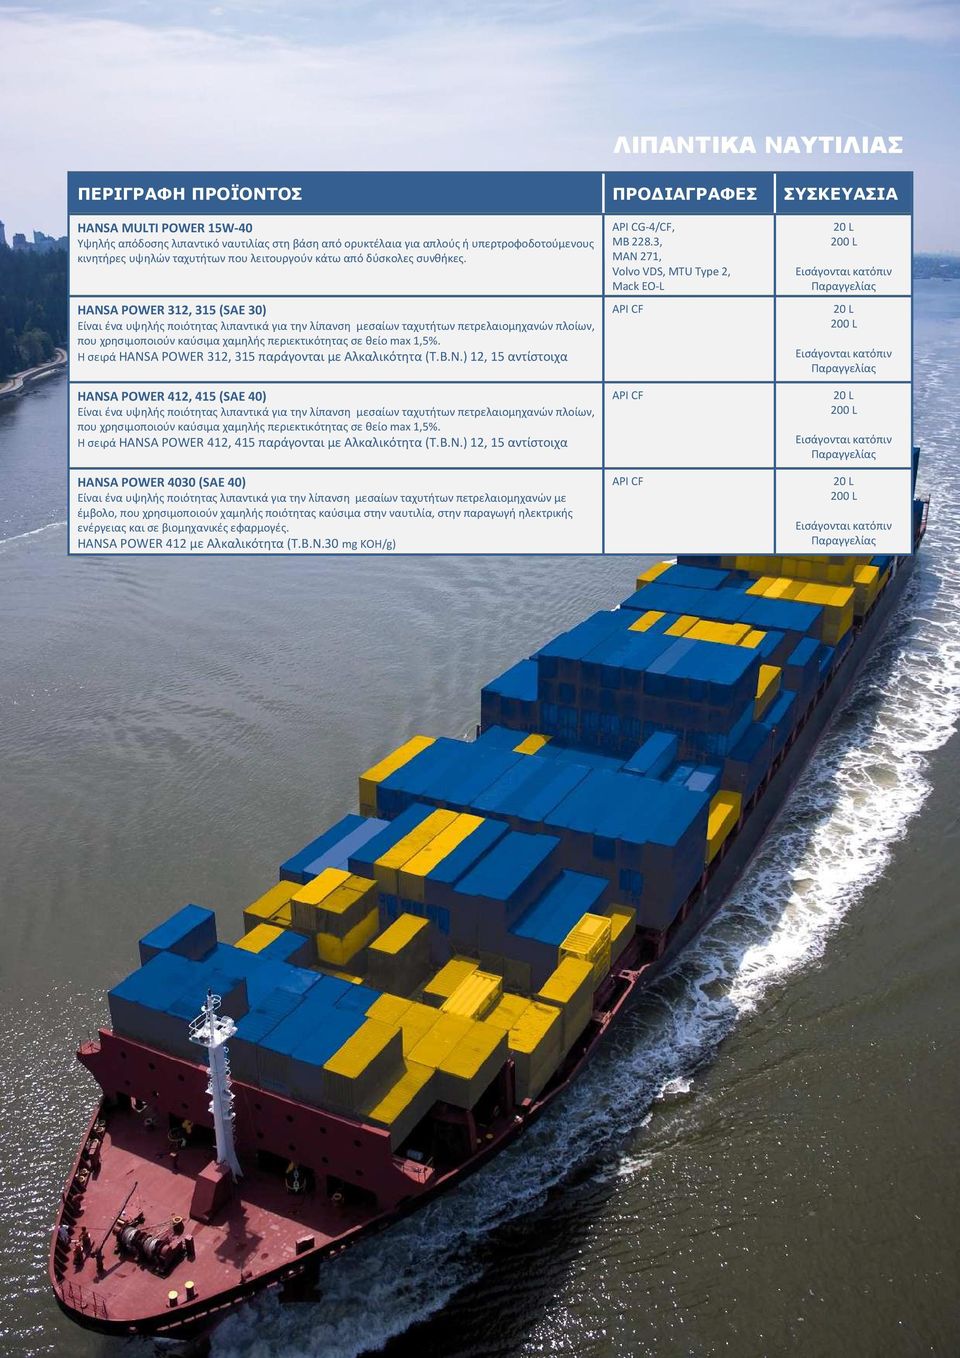 HANSA POWER 312, 315 (SAE 30) Είναι ένα υψηλής ποιότητας λιπαντικά για την λίπανση μεσαίων ταχυτήτων πετρελαιομηχανών πλοίων, που χρησιμοποιούν καύσιμα χαμηλής περιεκτικότητας σε θείο max 1,5%.